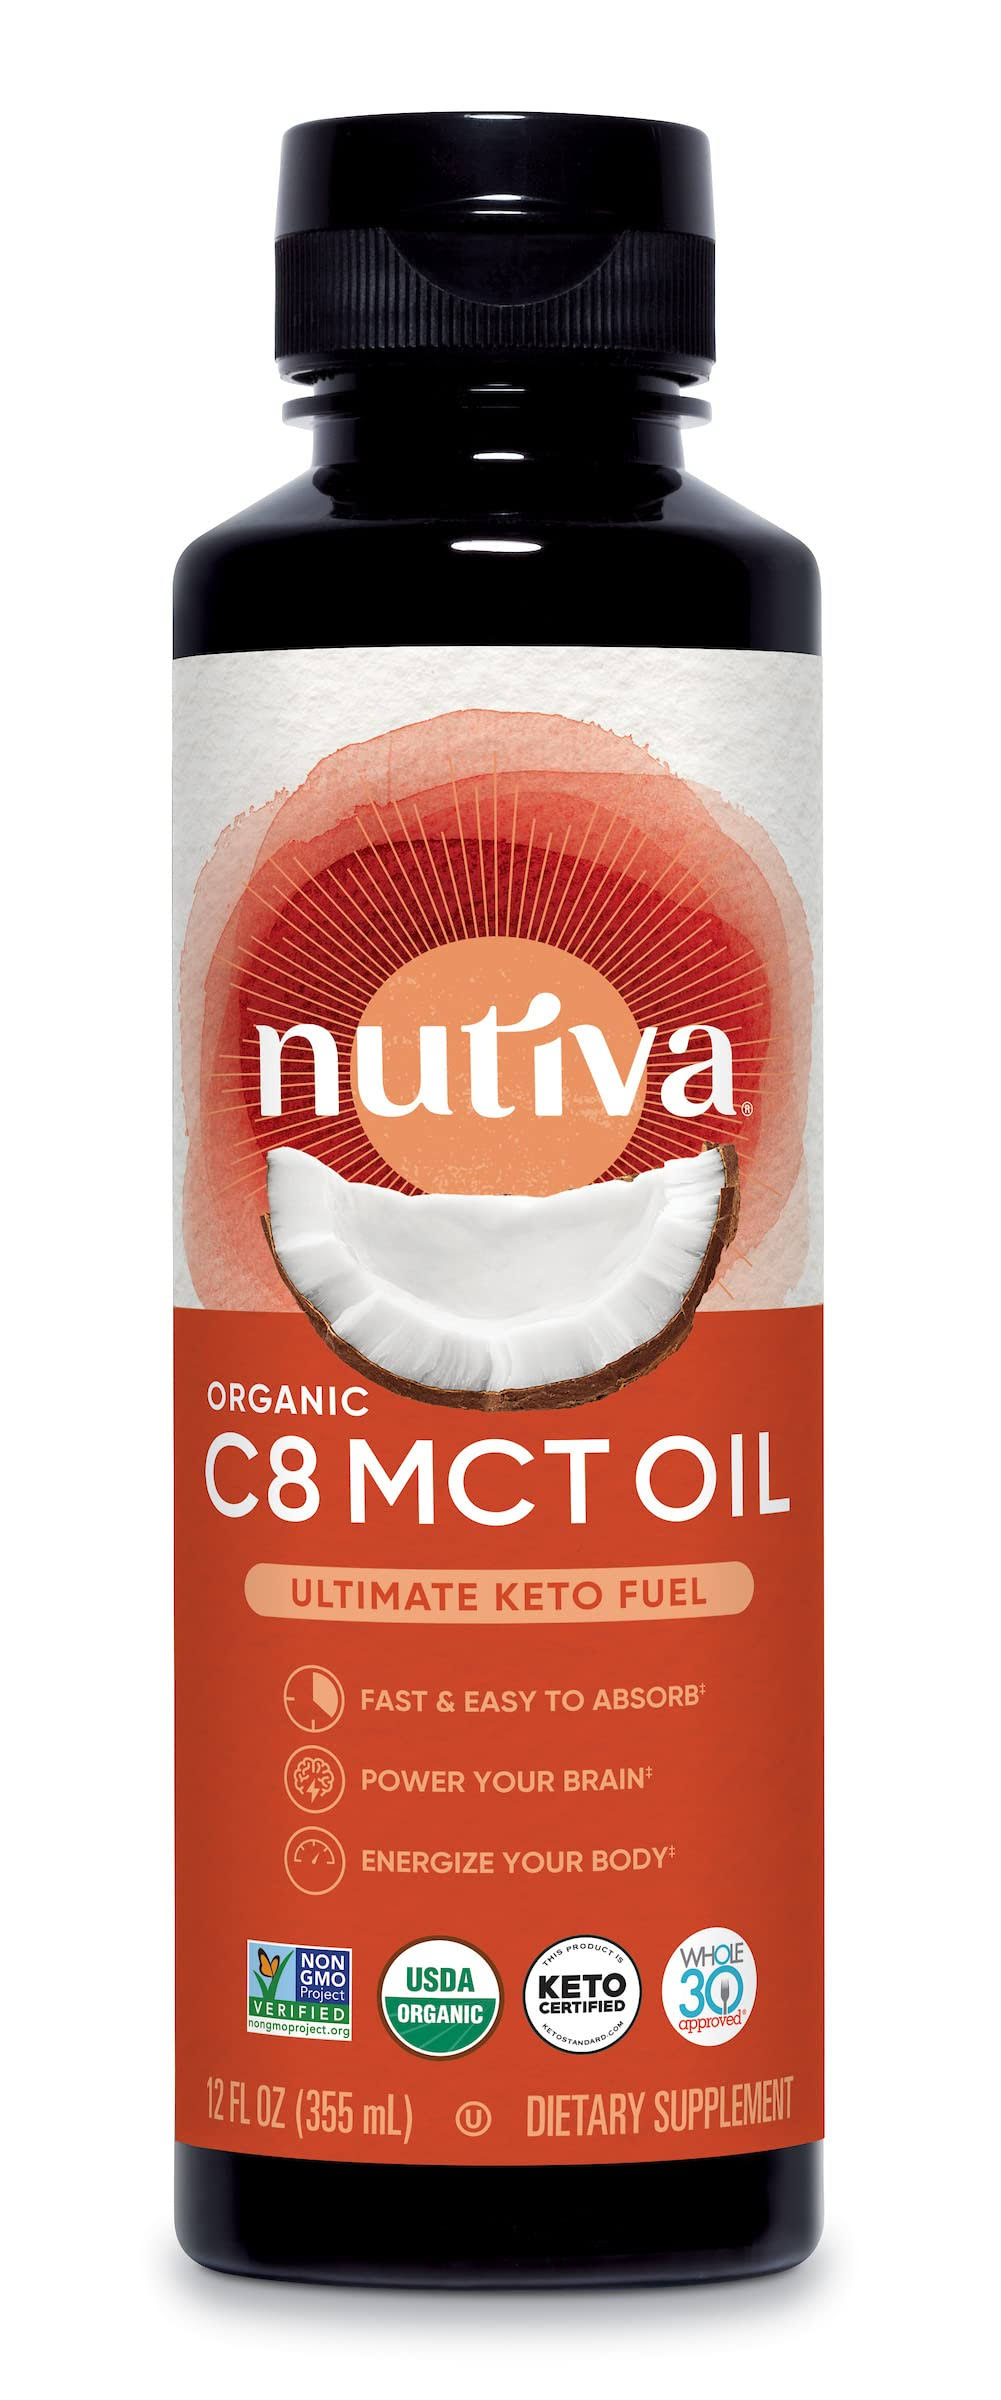 Nutiva MCT Oil, C8, Organic - 12 fl oz